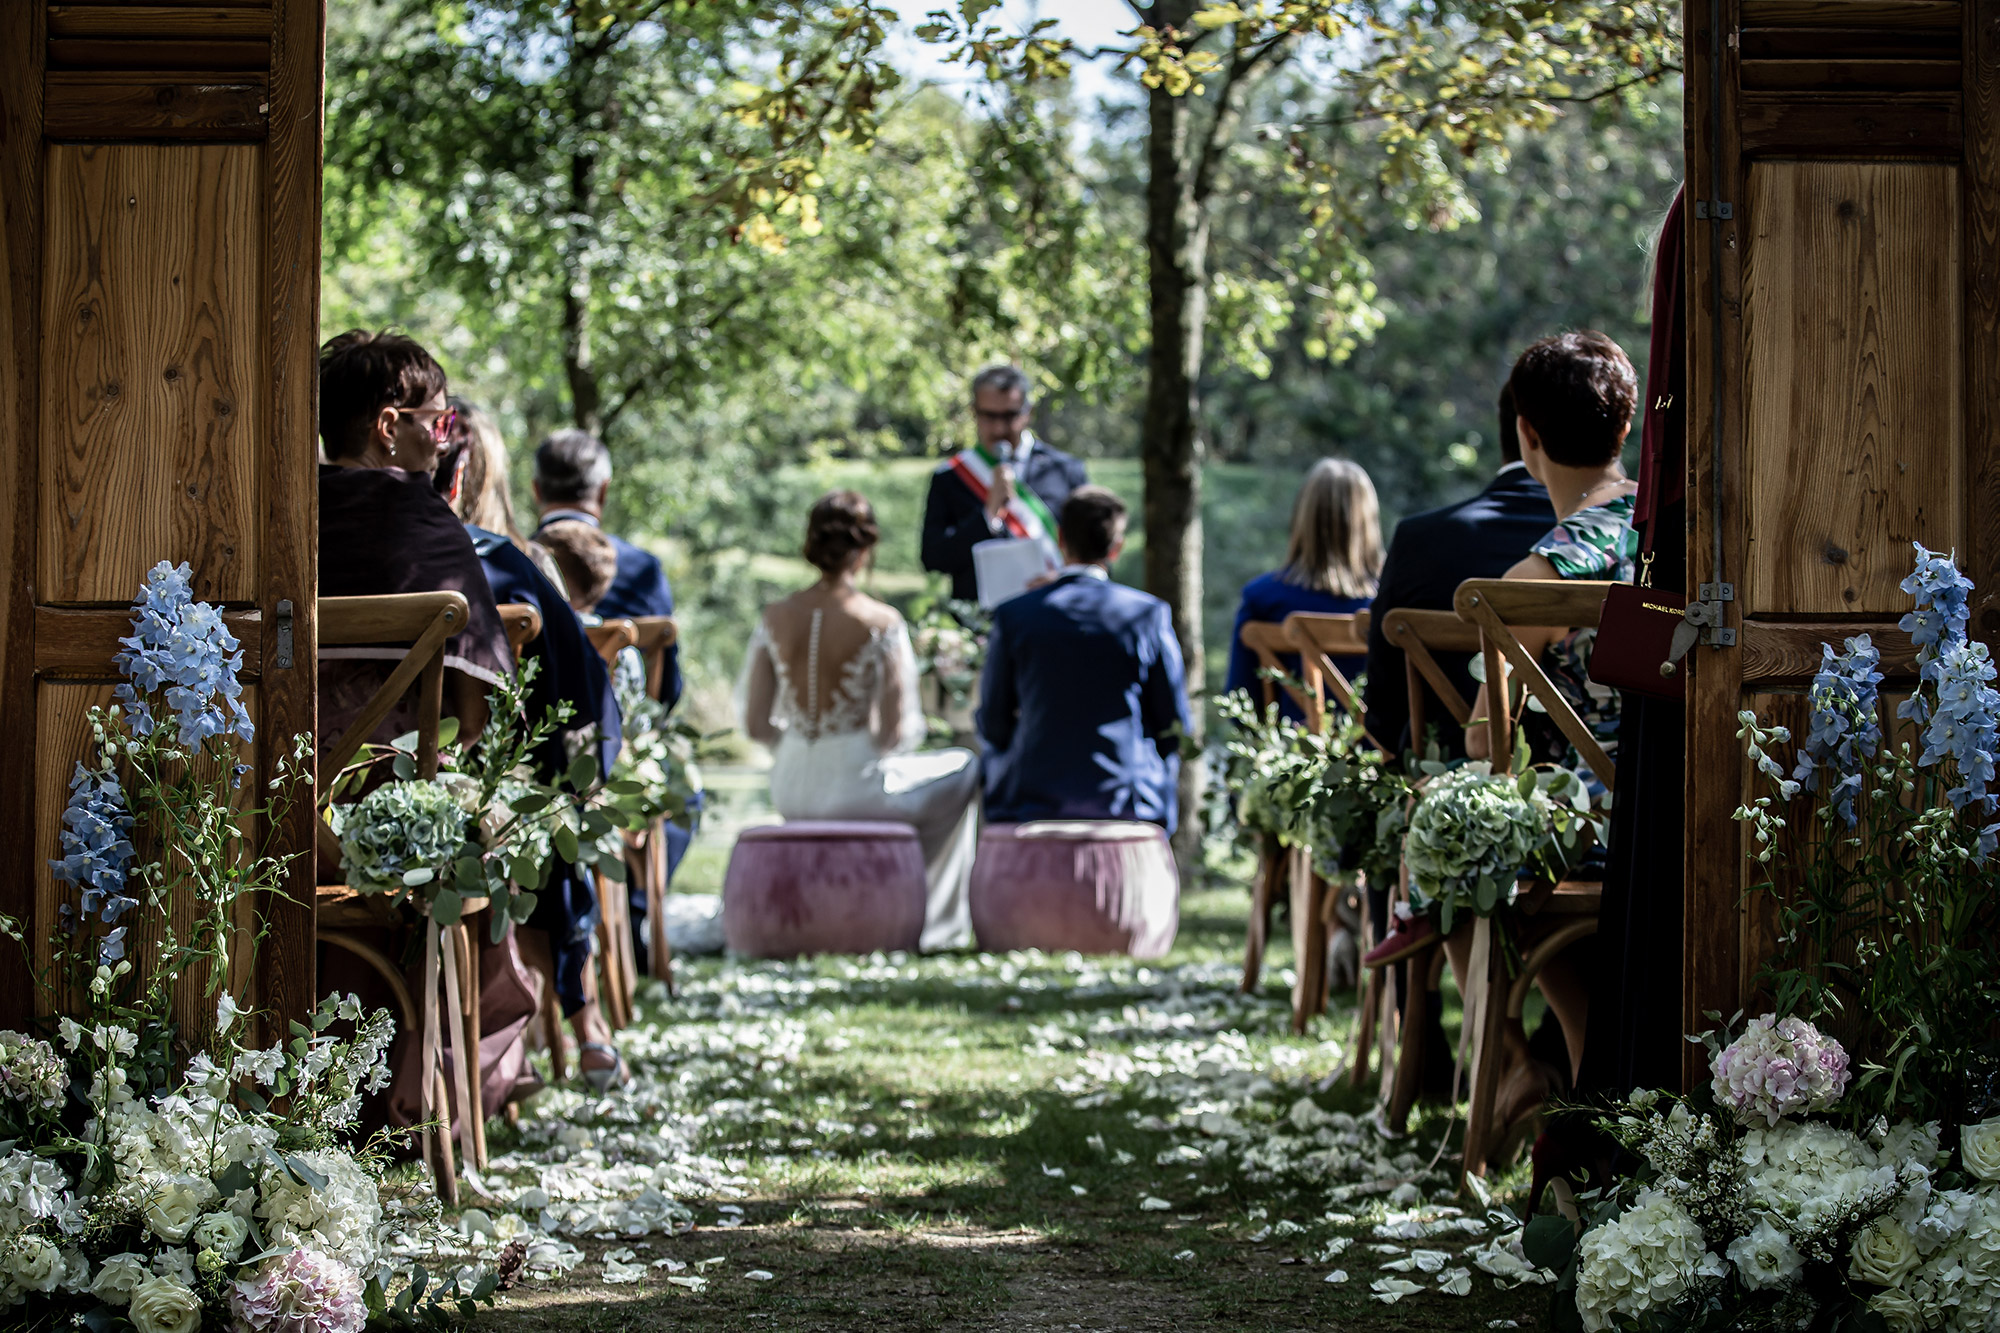 ..imagesweddings enmatrimonio convento annunciata petali bonbons cerimonia civile by Photo27